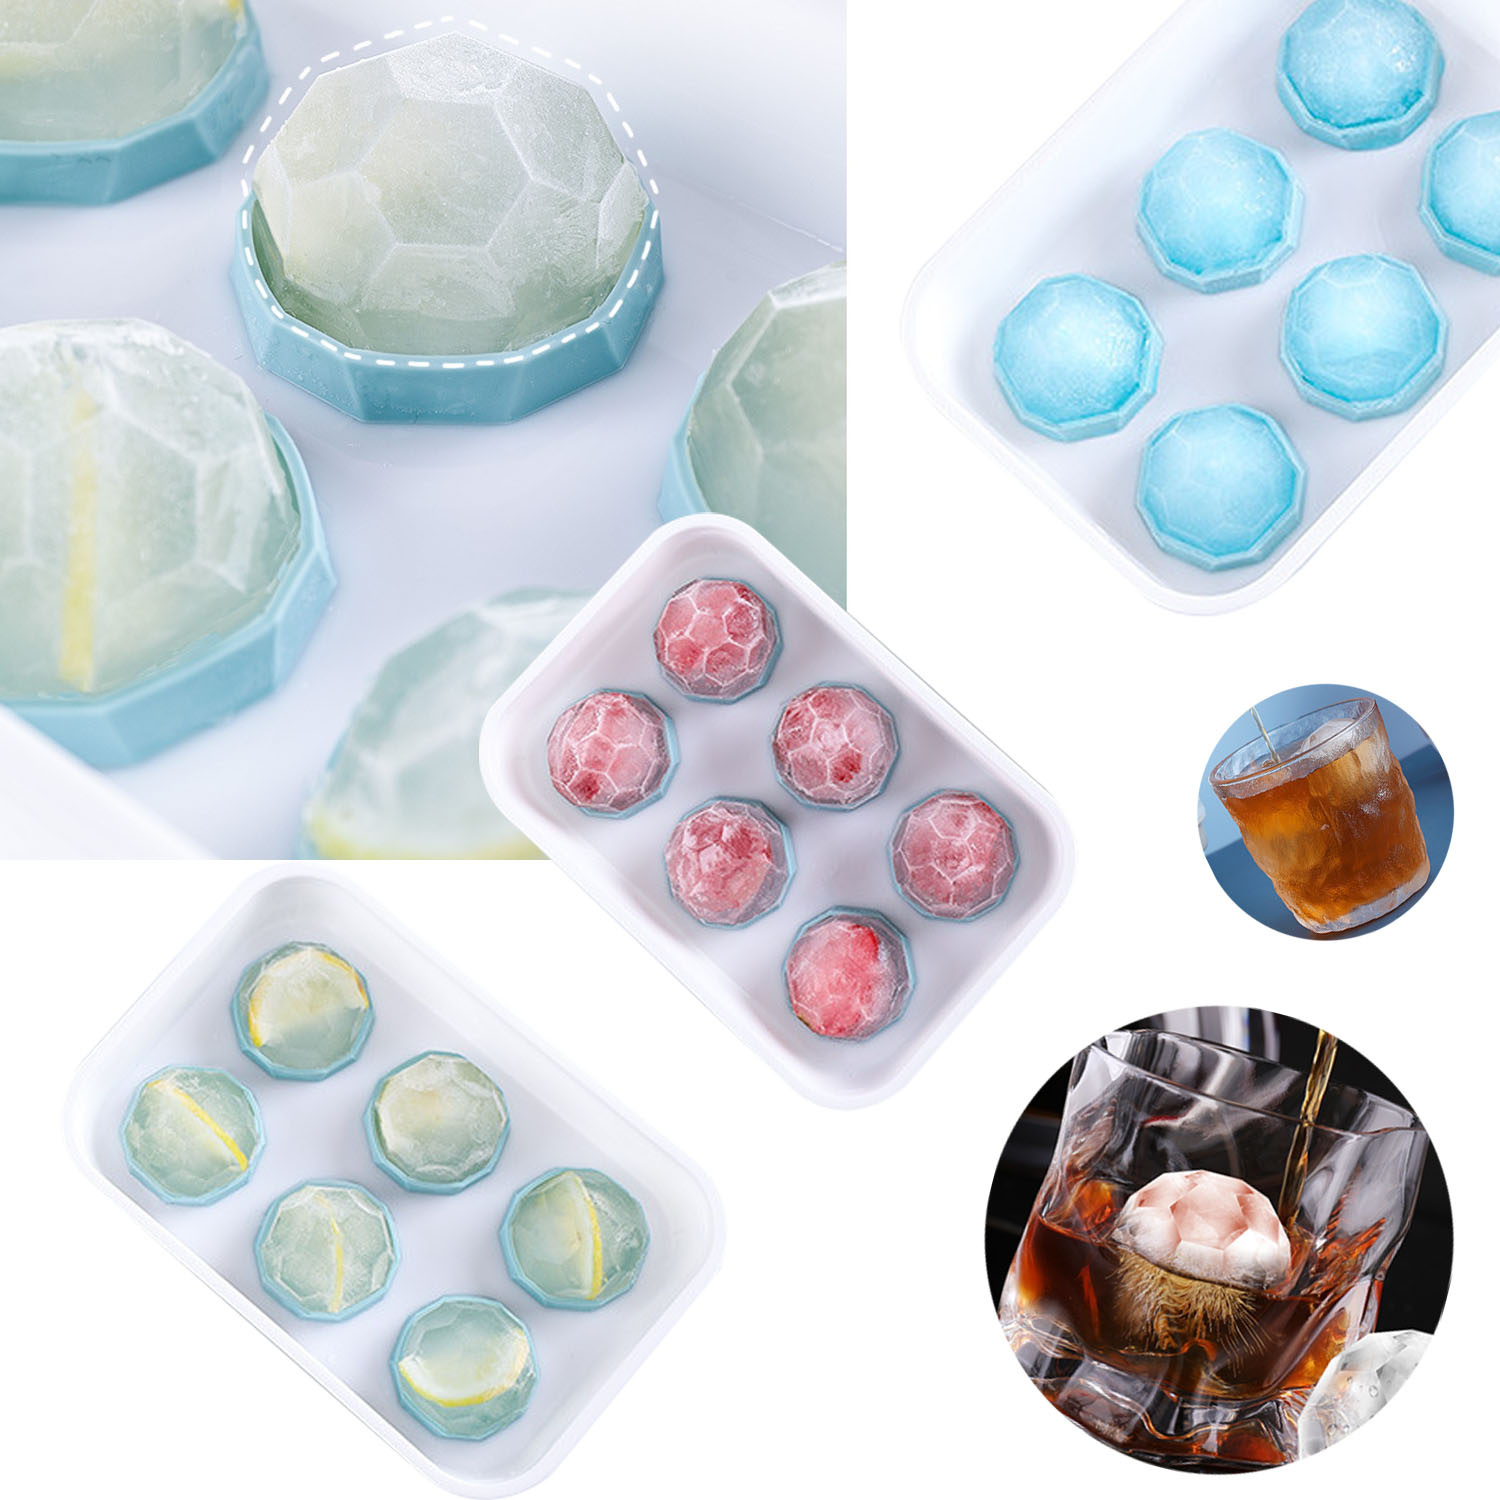  6 Grids Ice Maker Silicone Ice Cube Ice Tray Creative Ice Tray Whiskey Ice Balls Tray